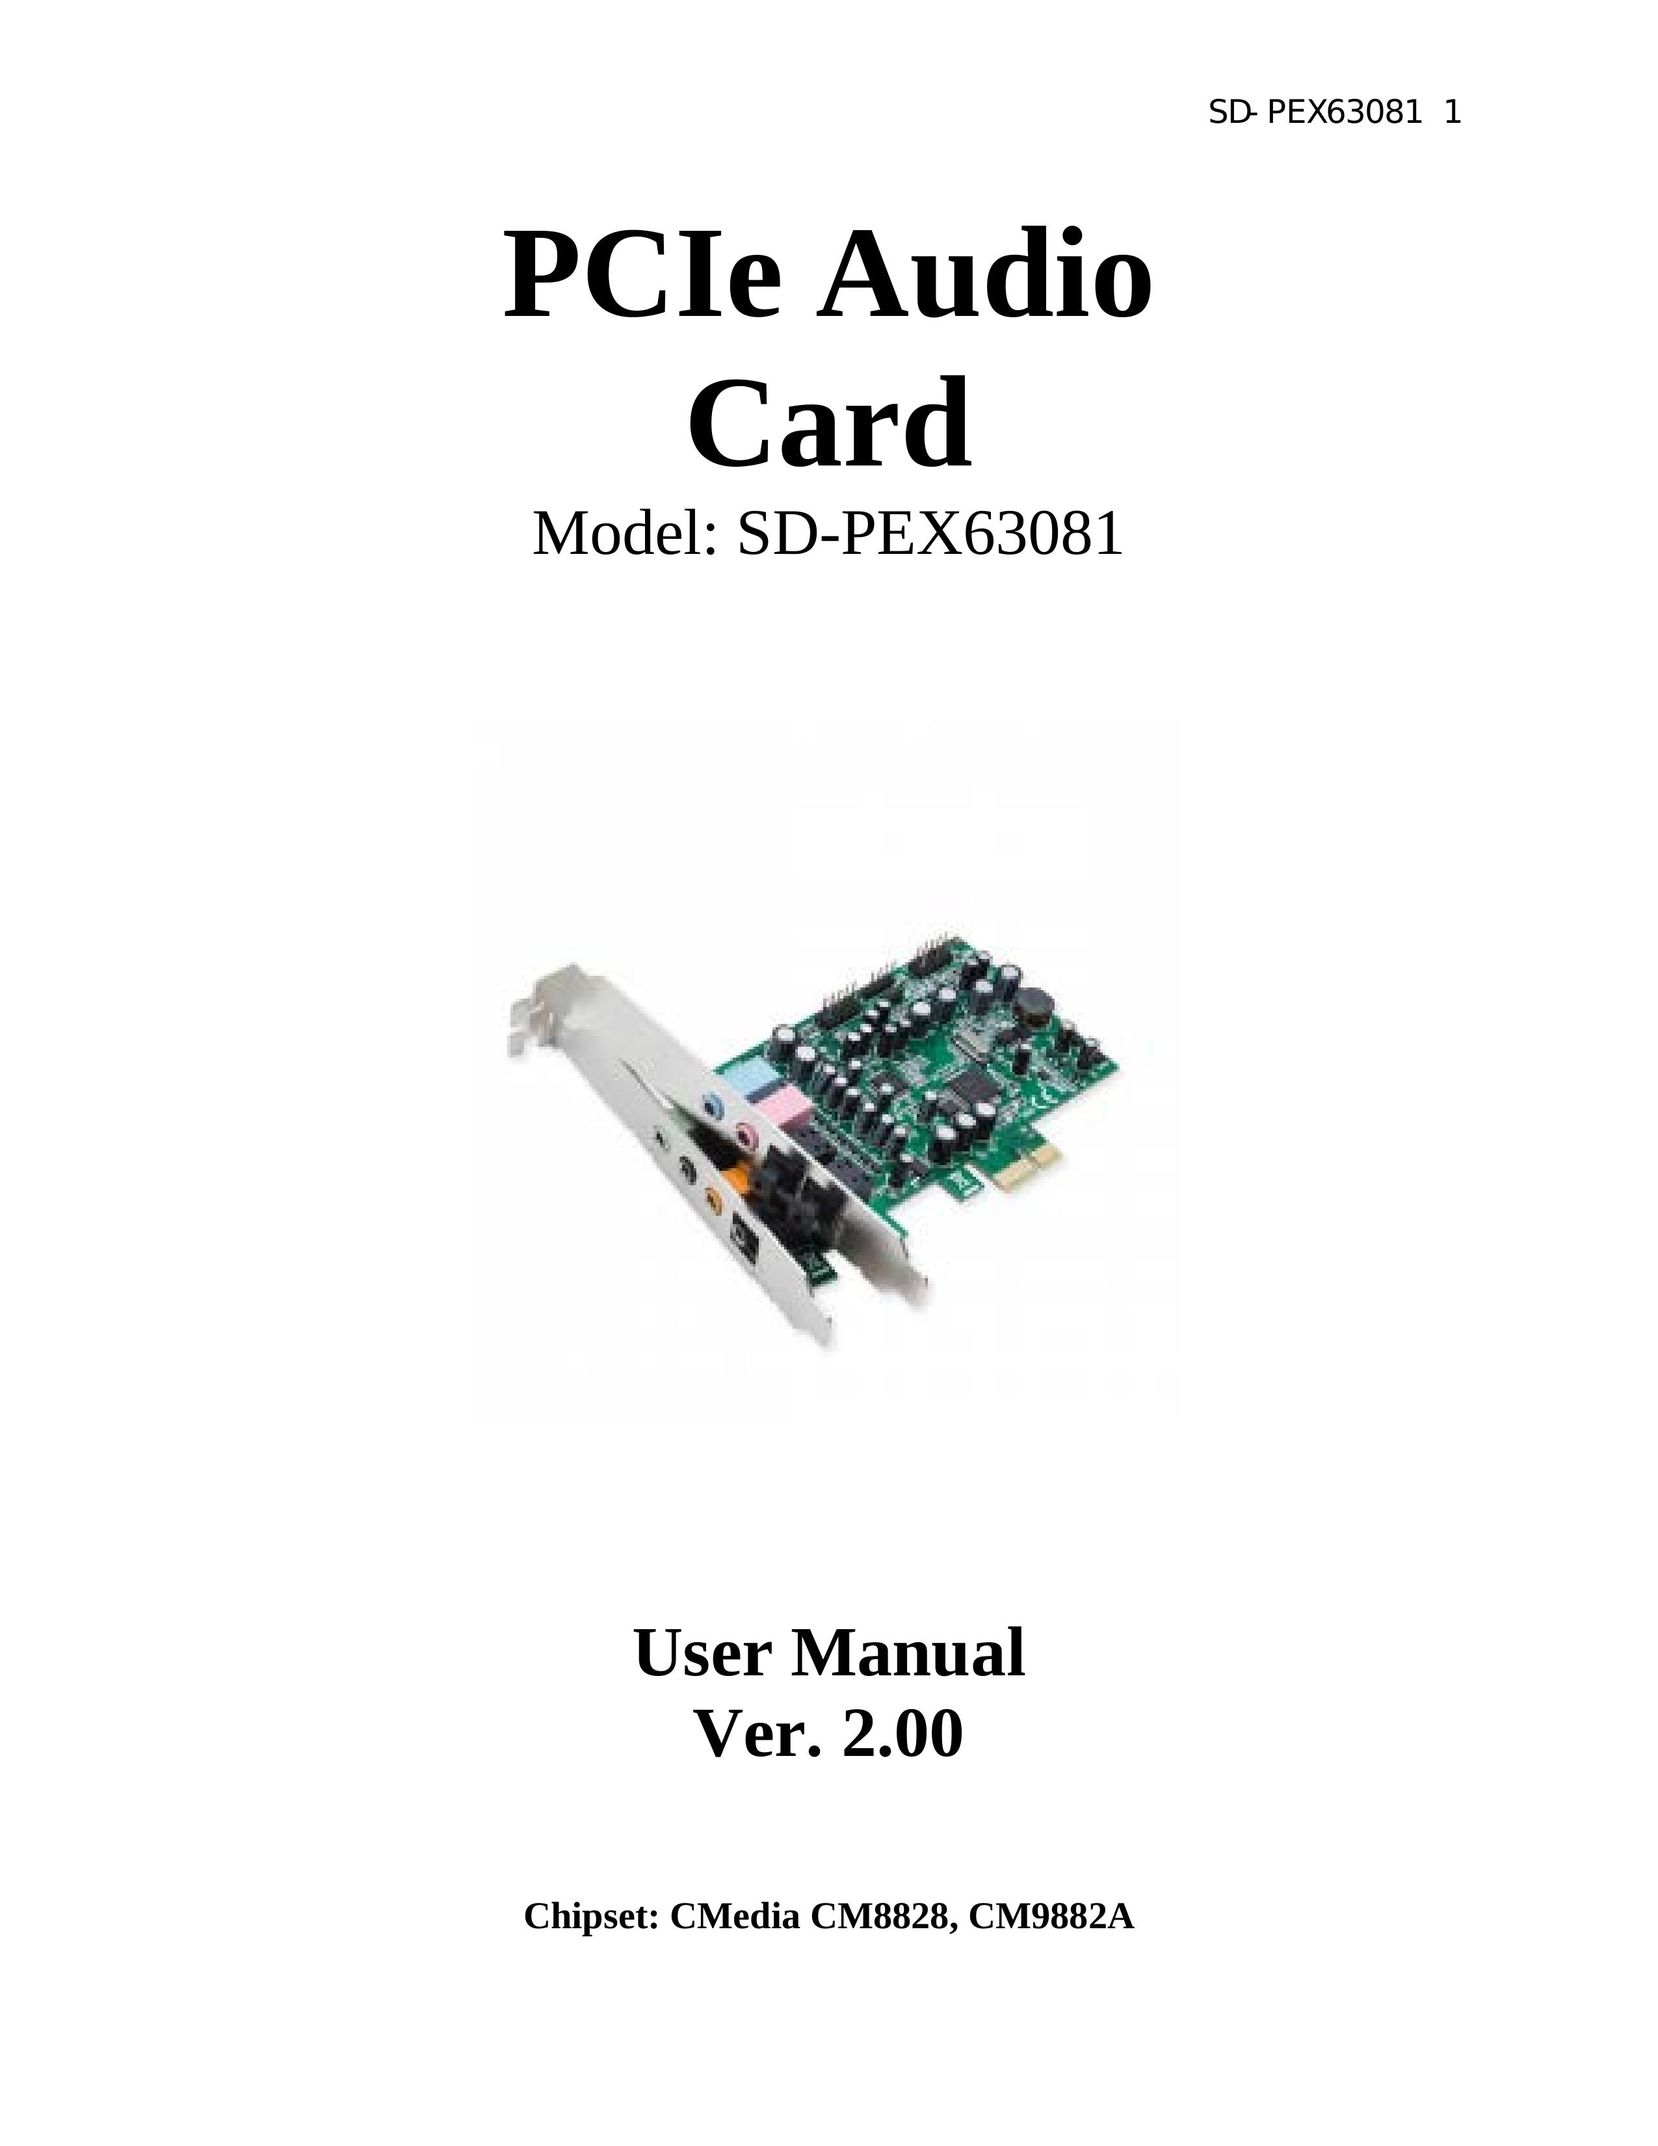 Baldor SD-PEX63081 Computer Hardware User Manual